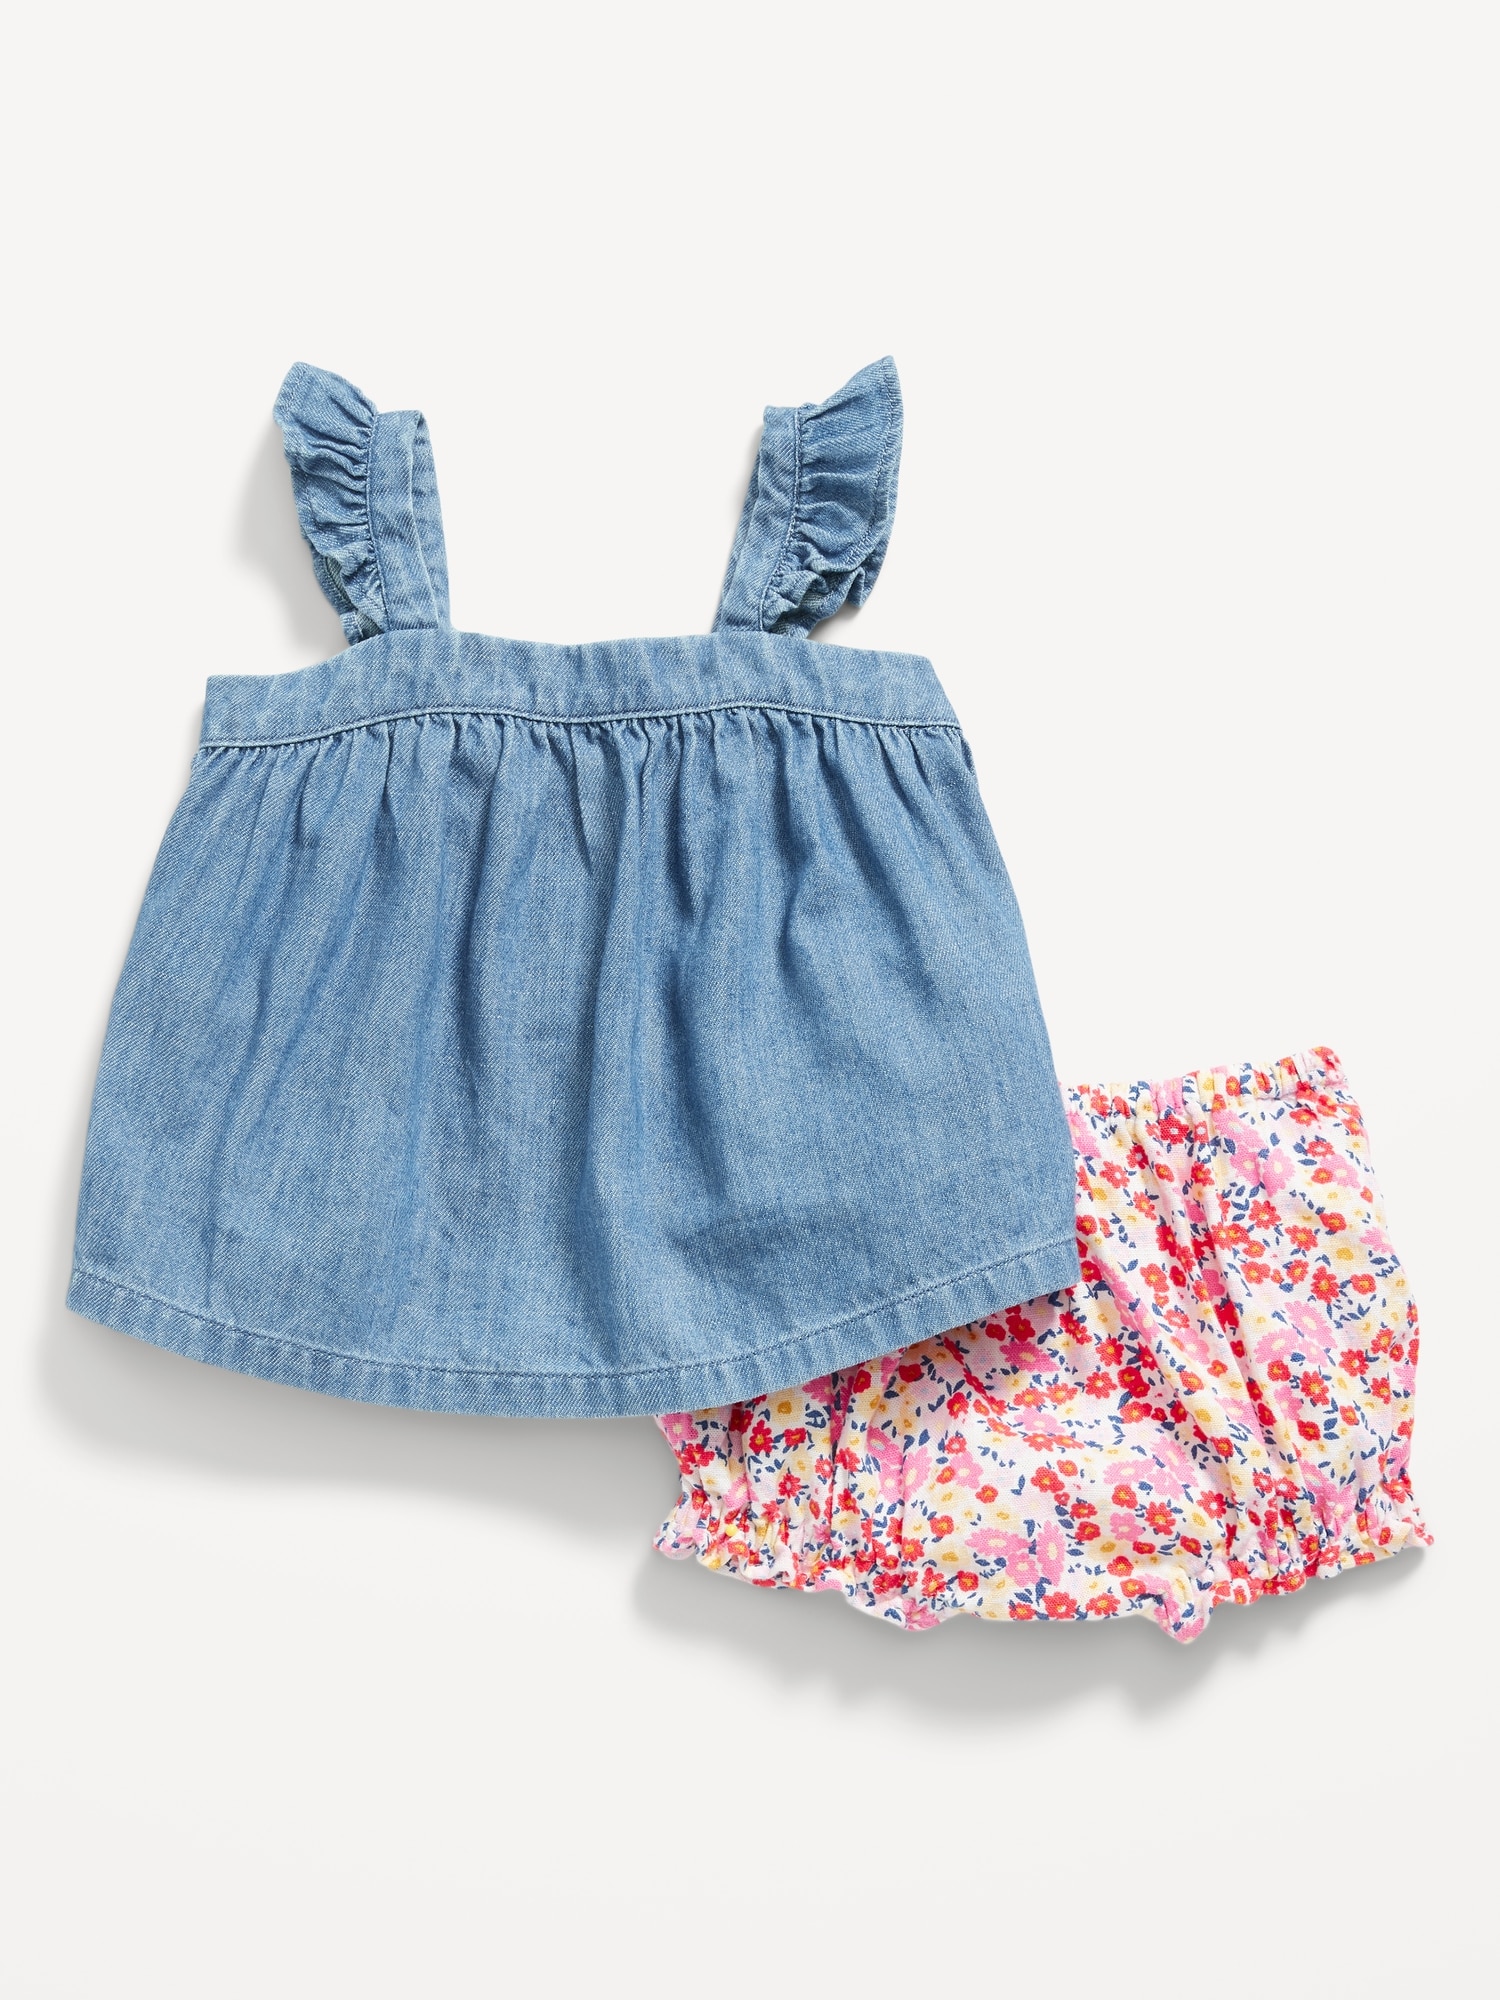 Sleeveless Ruffled Dobby Top and Bloomer Shorts for Baby